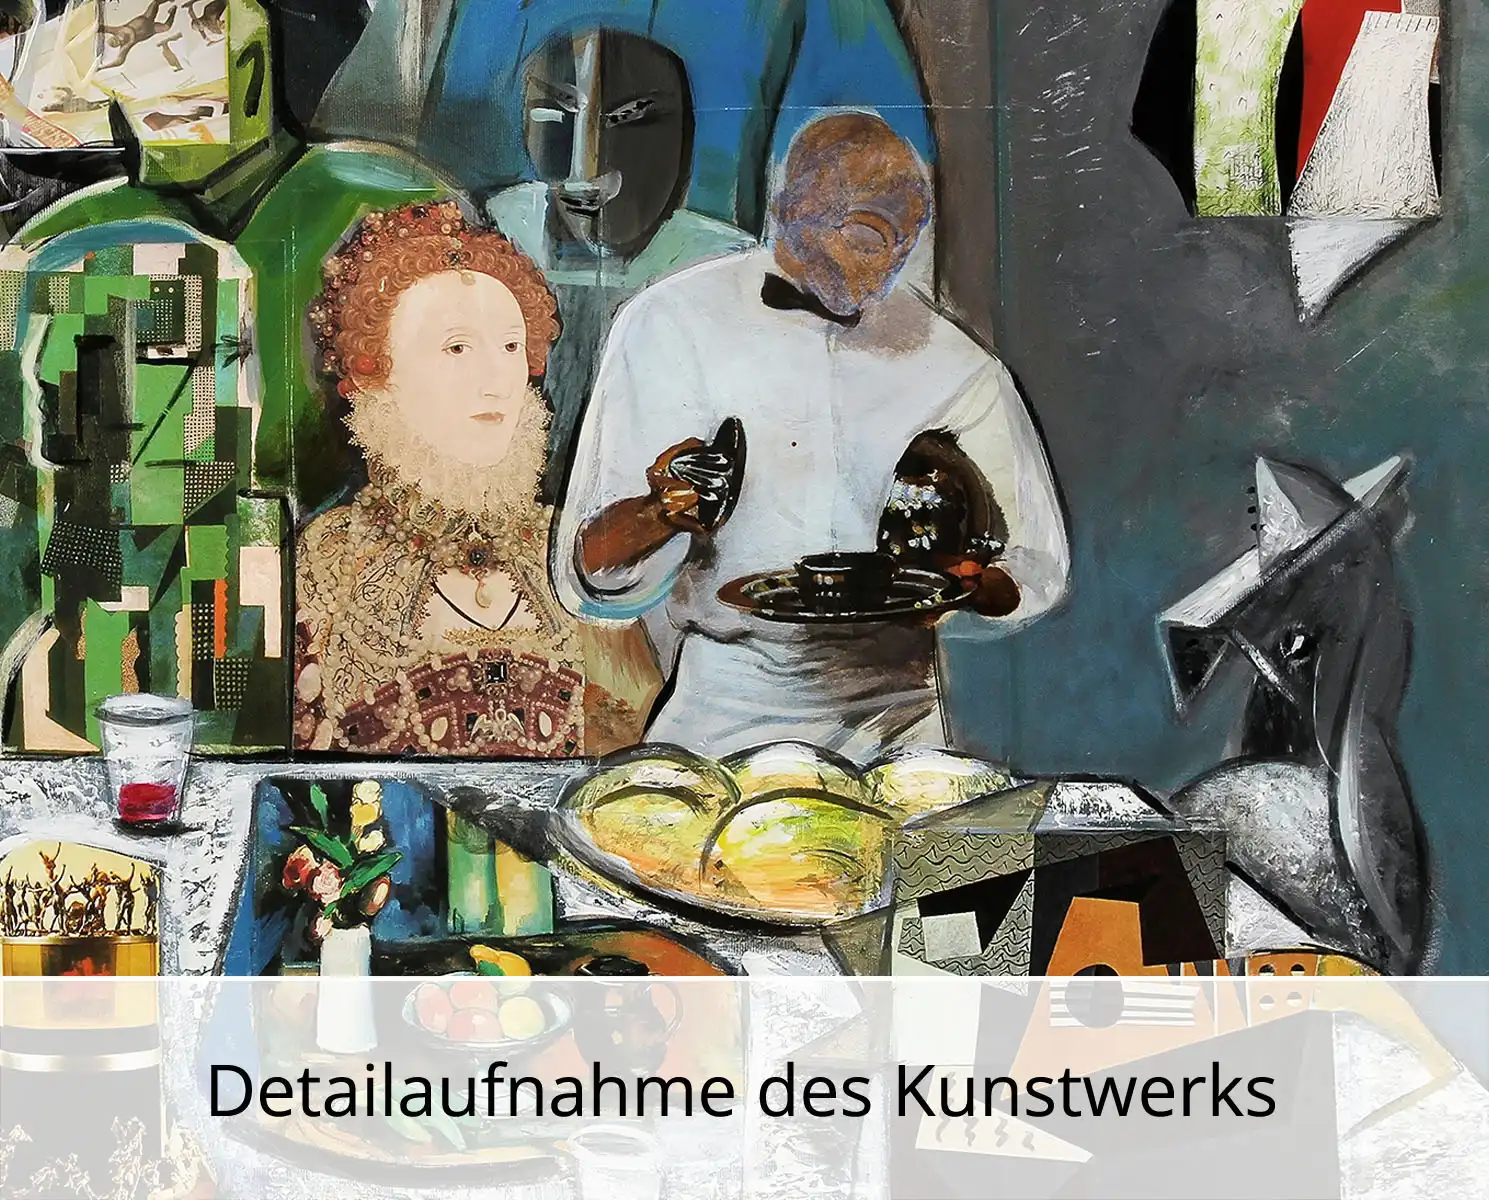 Limitierte Edition auf Papier, K. Namazi: "Das Festmahl", Fineartprint